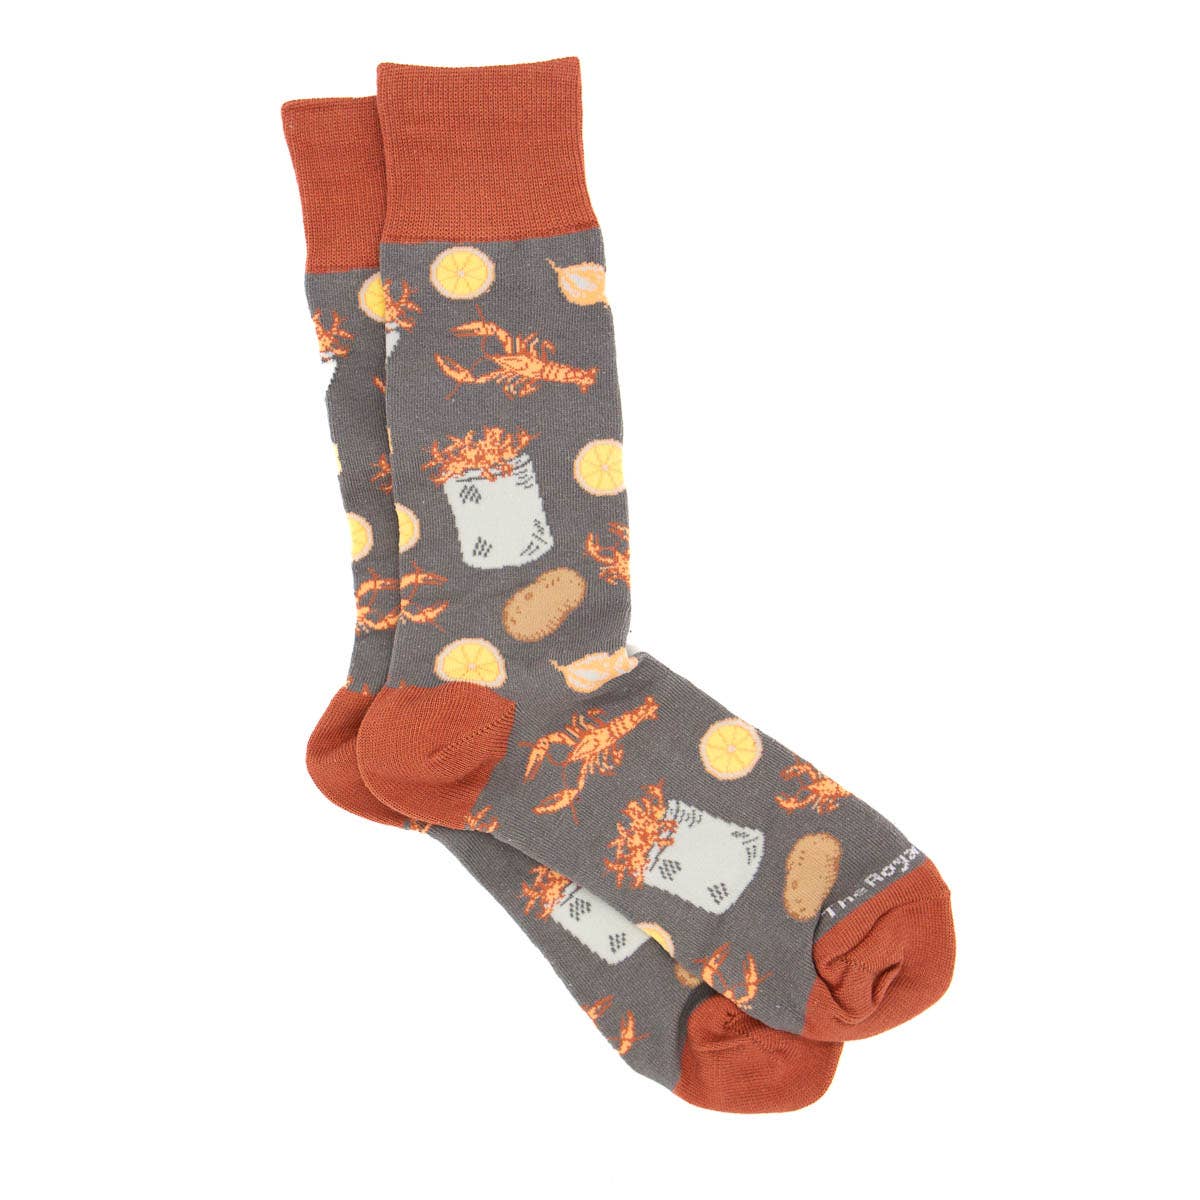 Men's Crawfish Boil Socks   Gray/Red/Yellow  One Size